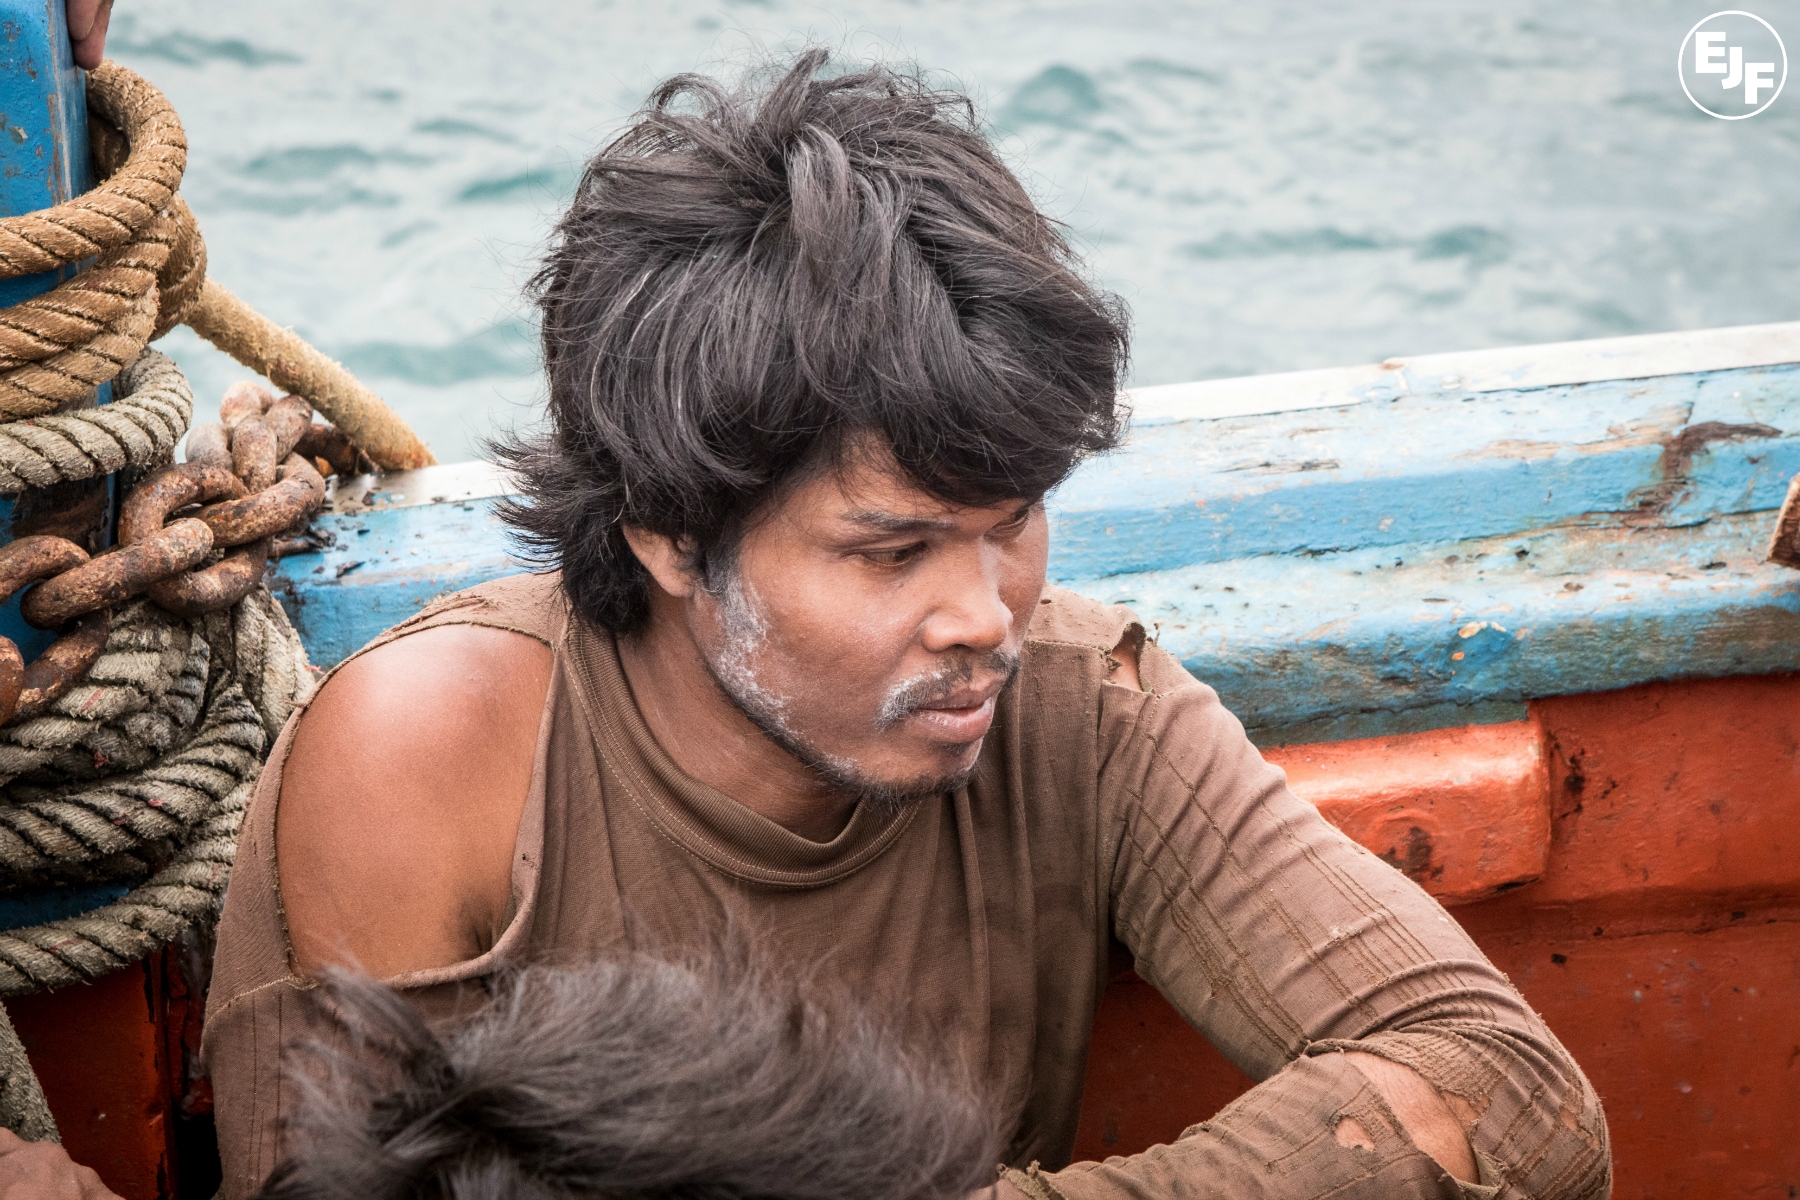 Thailand urged to take further steps to eradicate fishing pirates and slavery